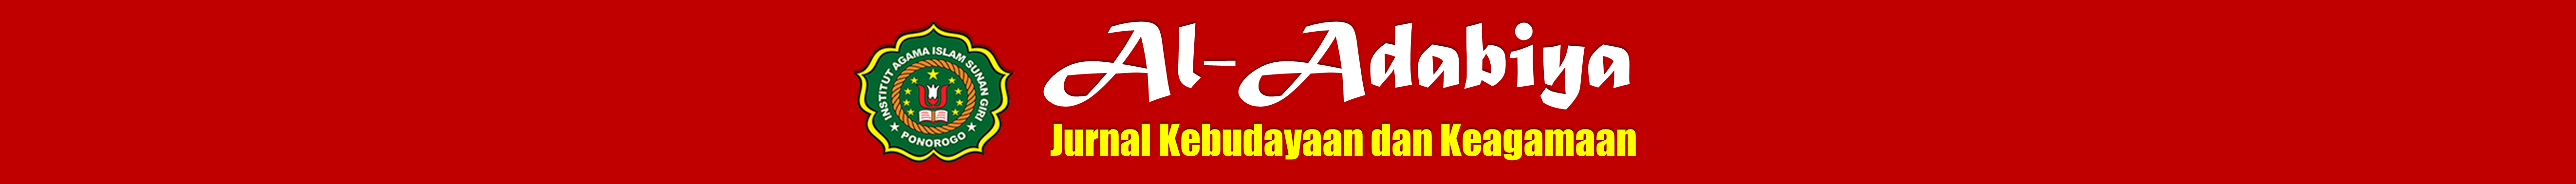 logo jurnal al-adabiya